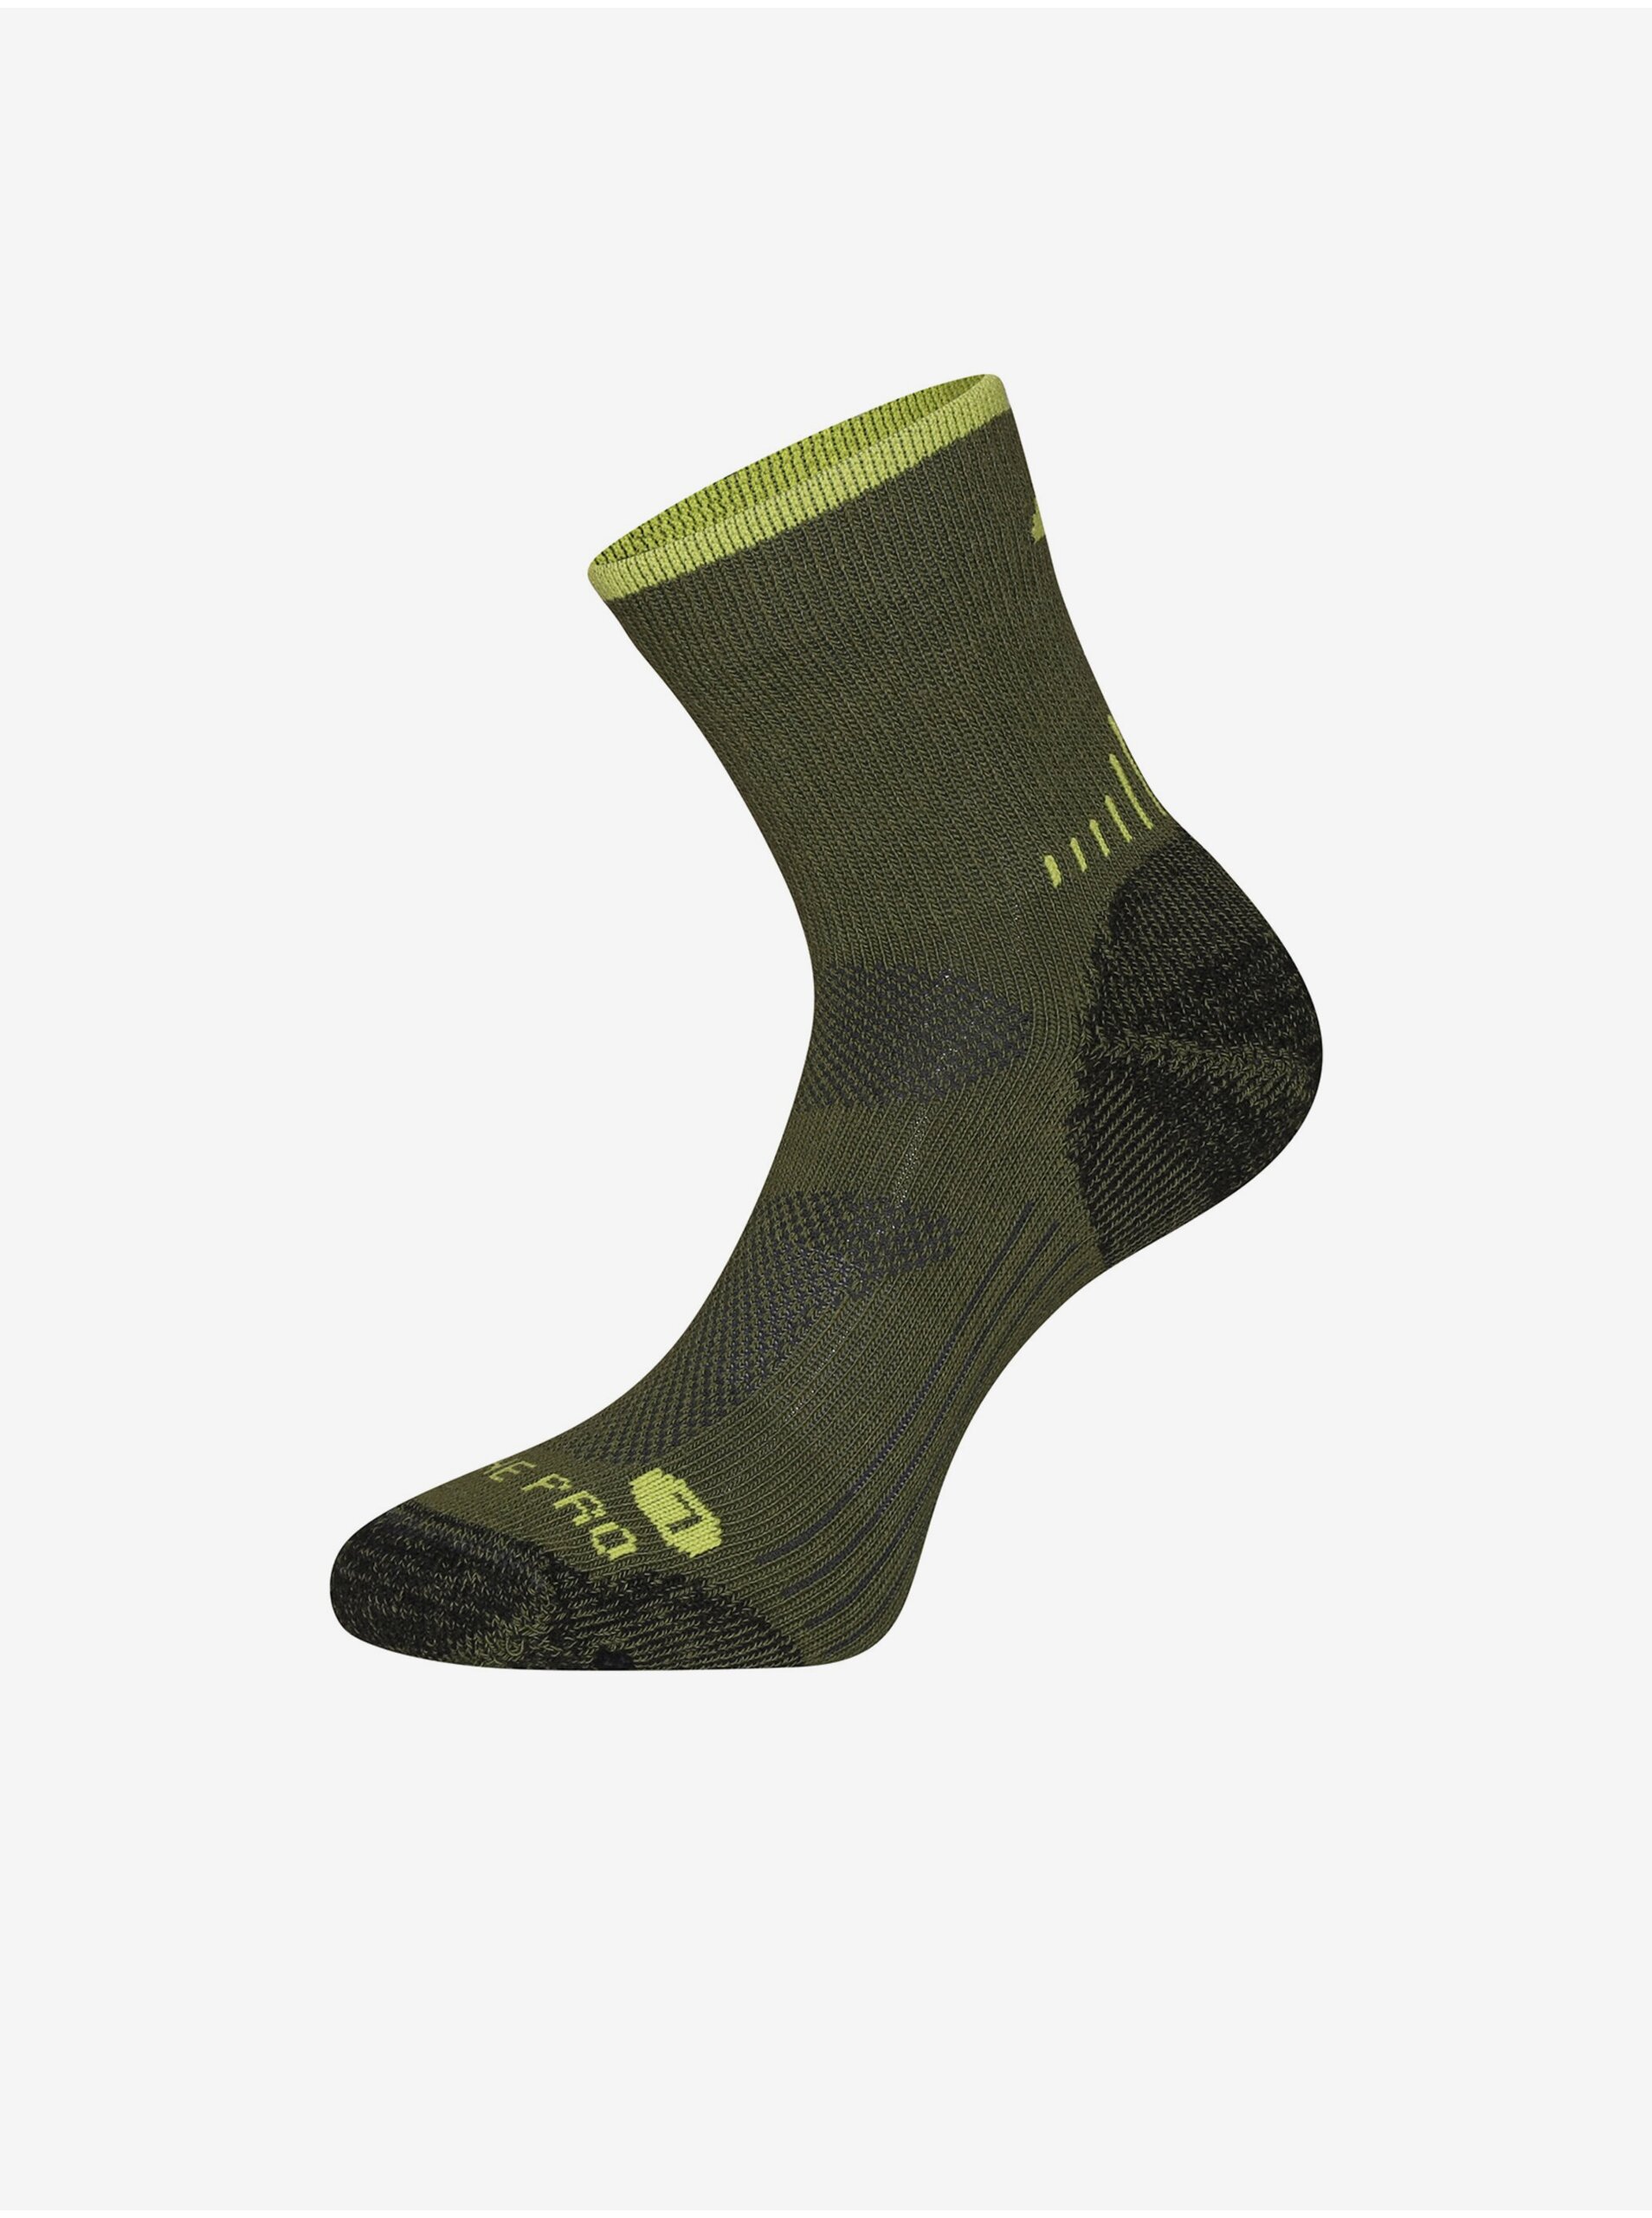 Lacno Zelené ponožky z merino vlny ALPINE PRO Kerowe